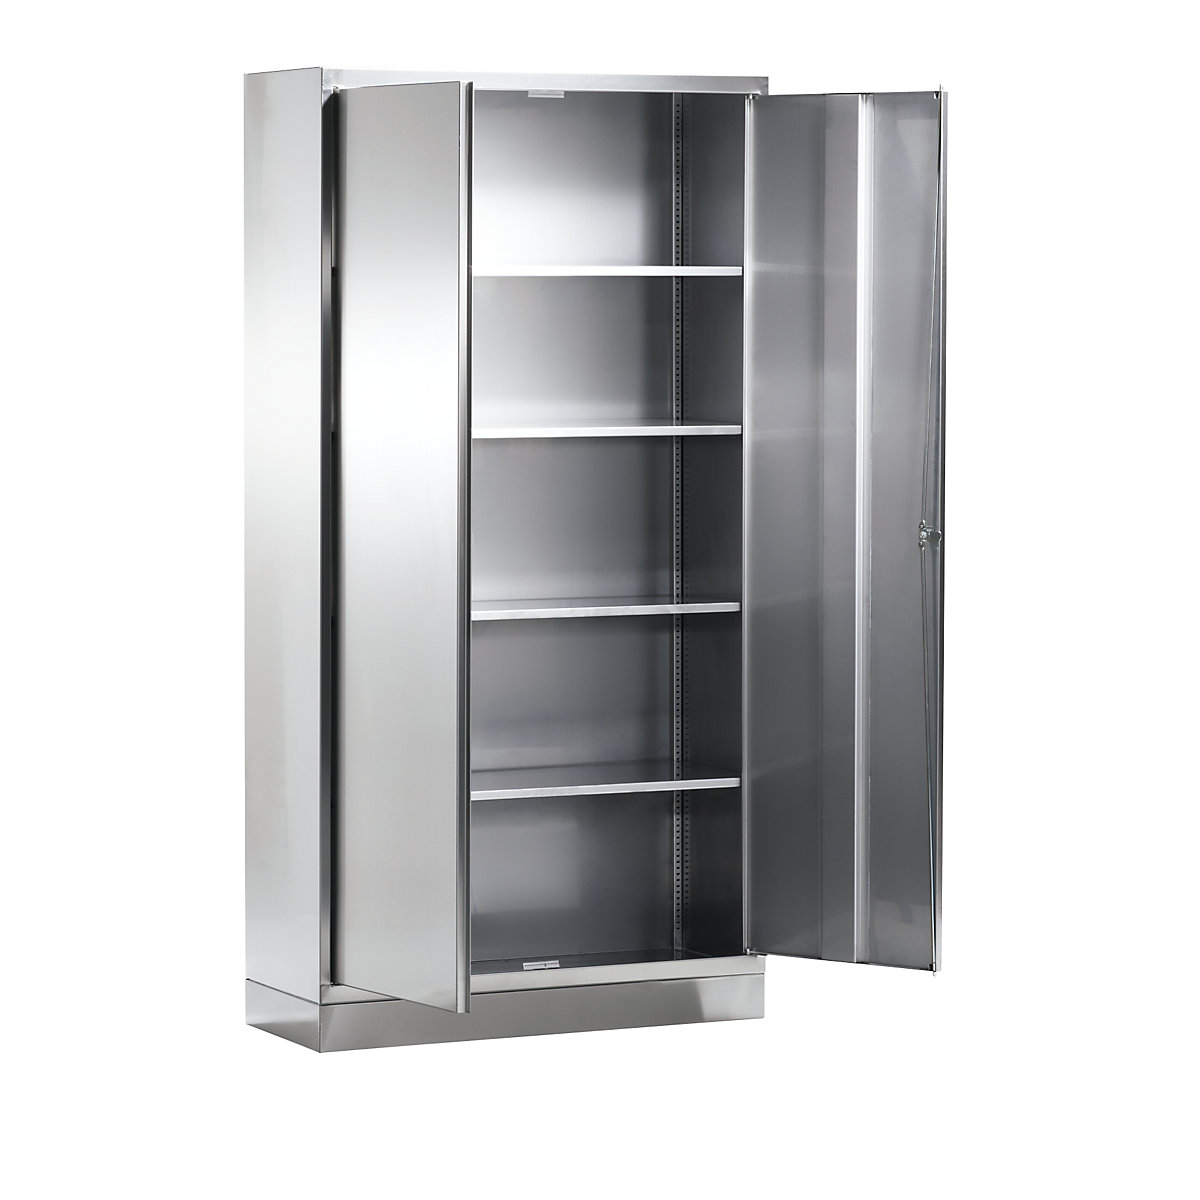 Stainless steel multi-purpose cupboard: double door cupboard | KAISER+KRAFT